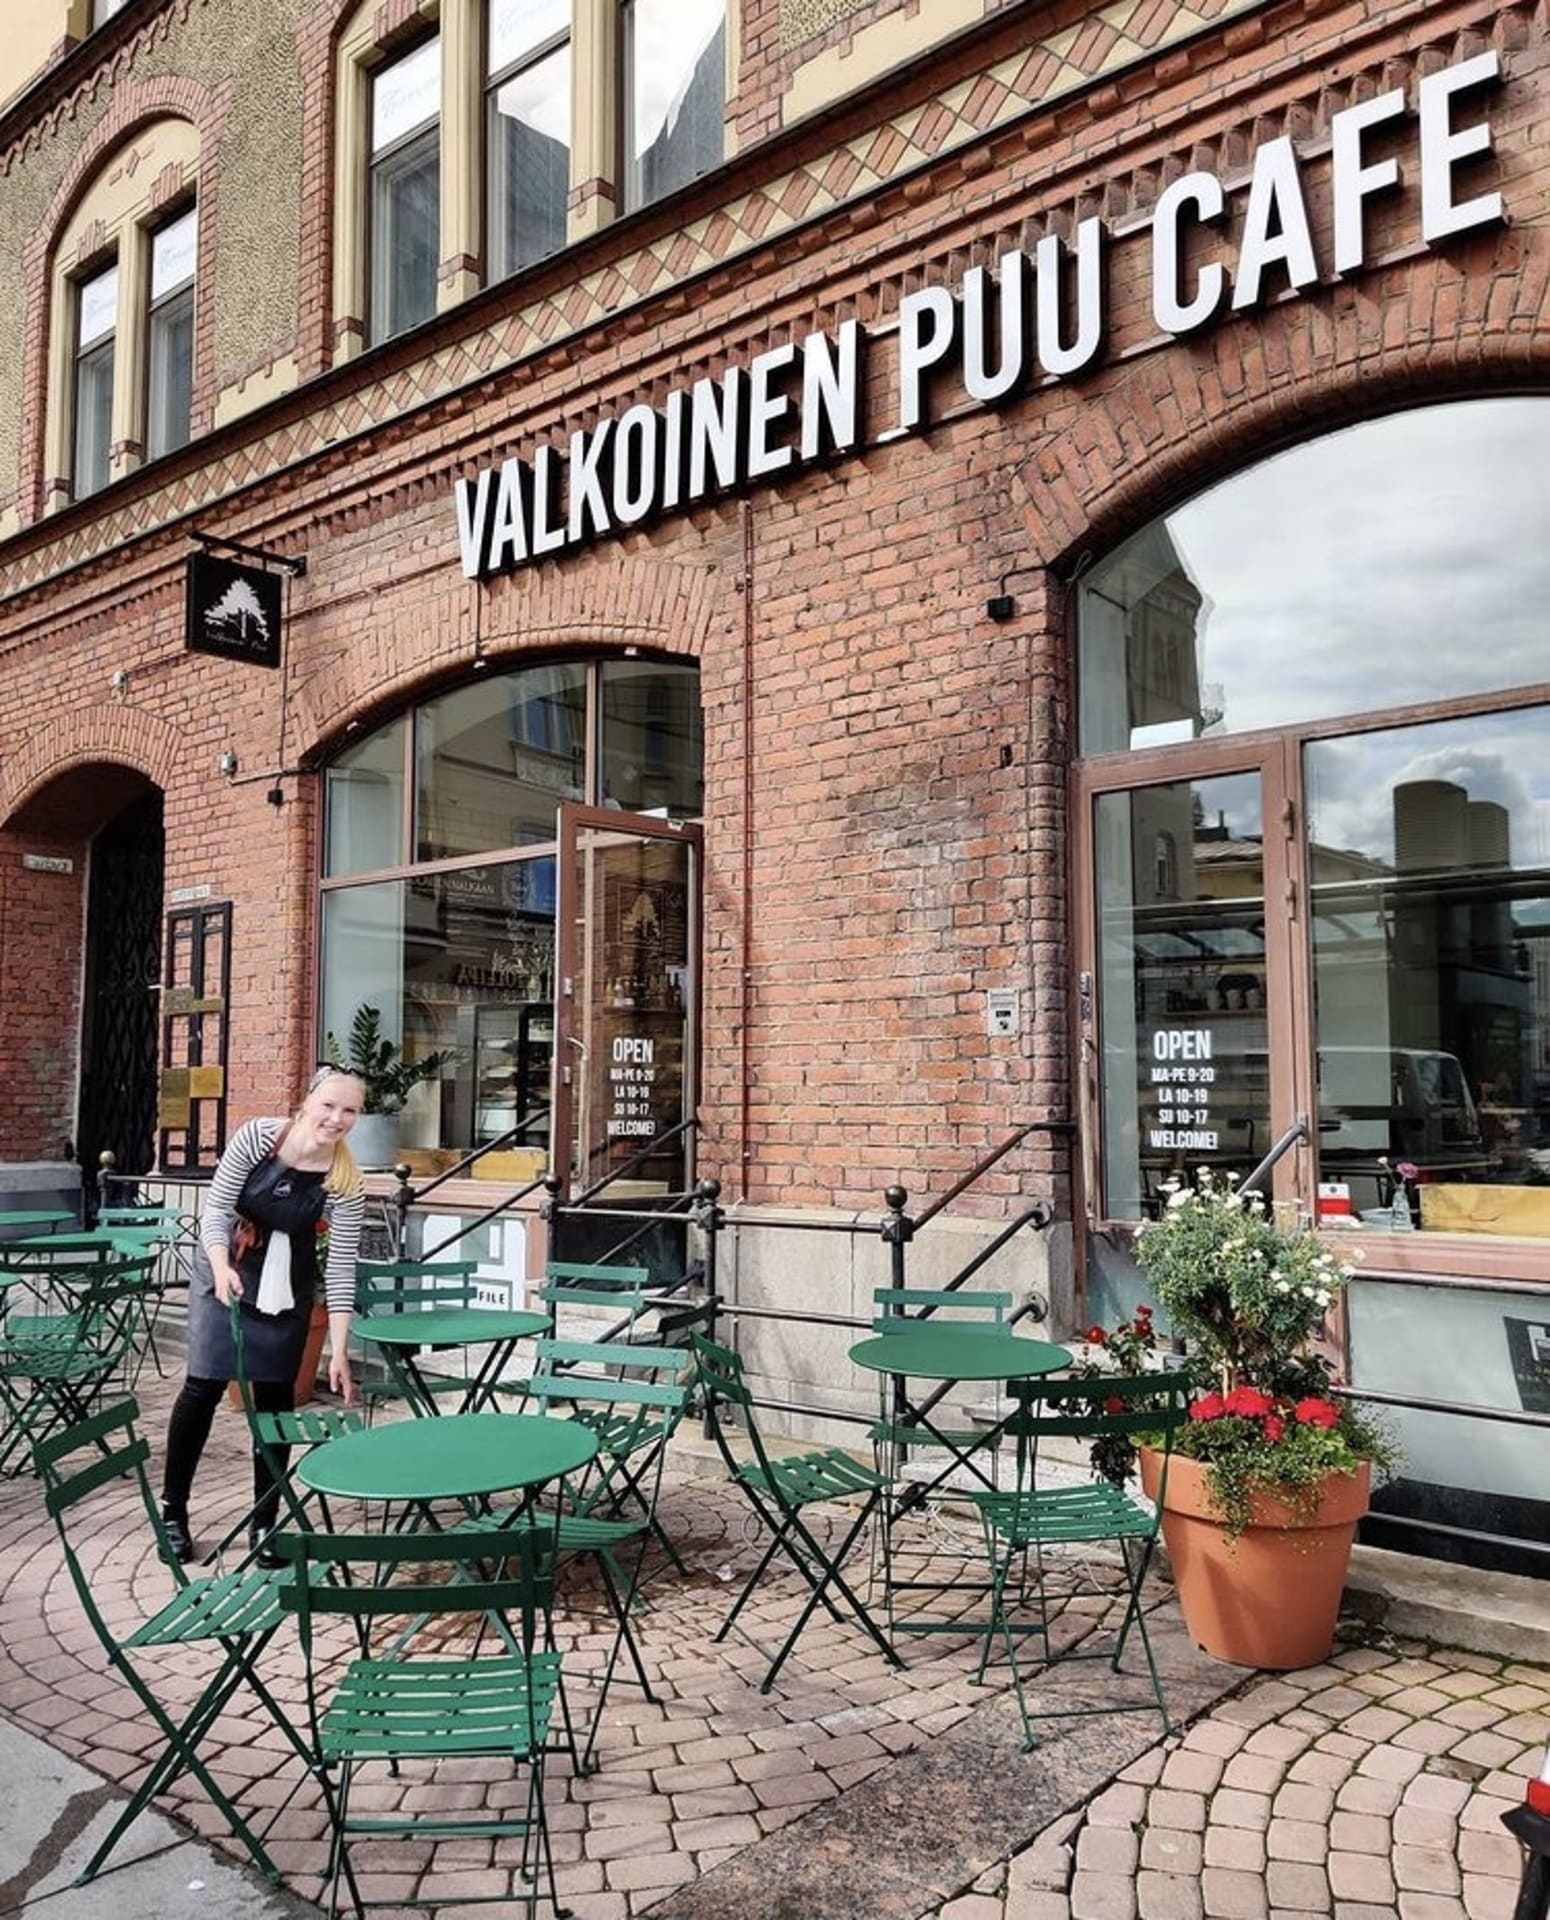 Valkoinen Puu Café Tampere outside